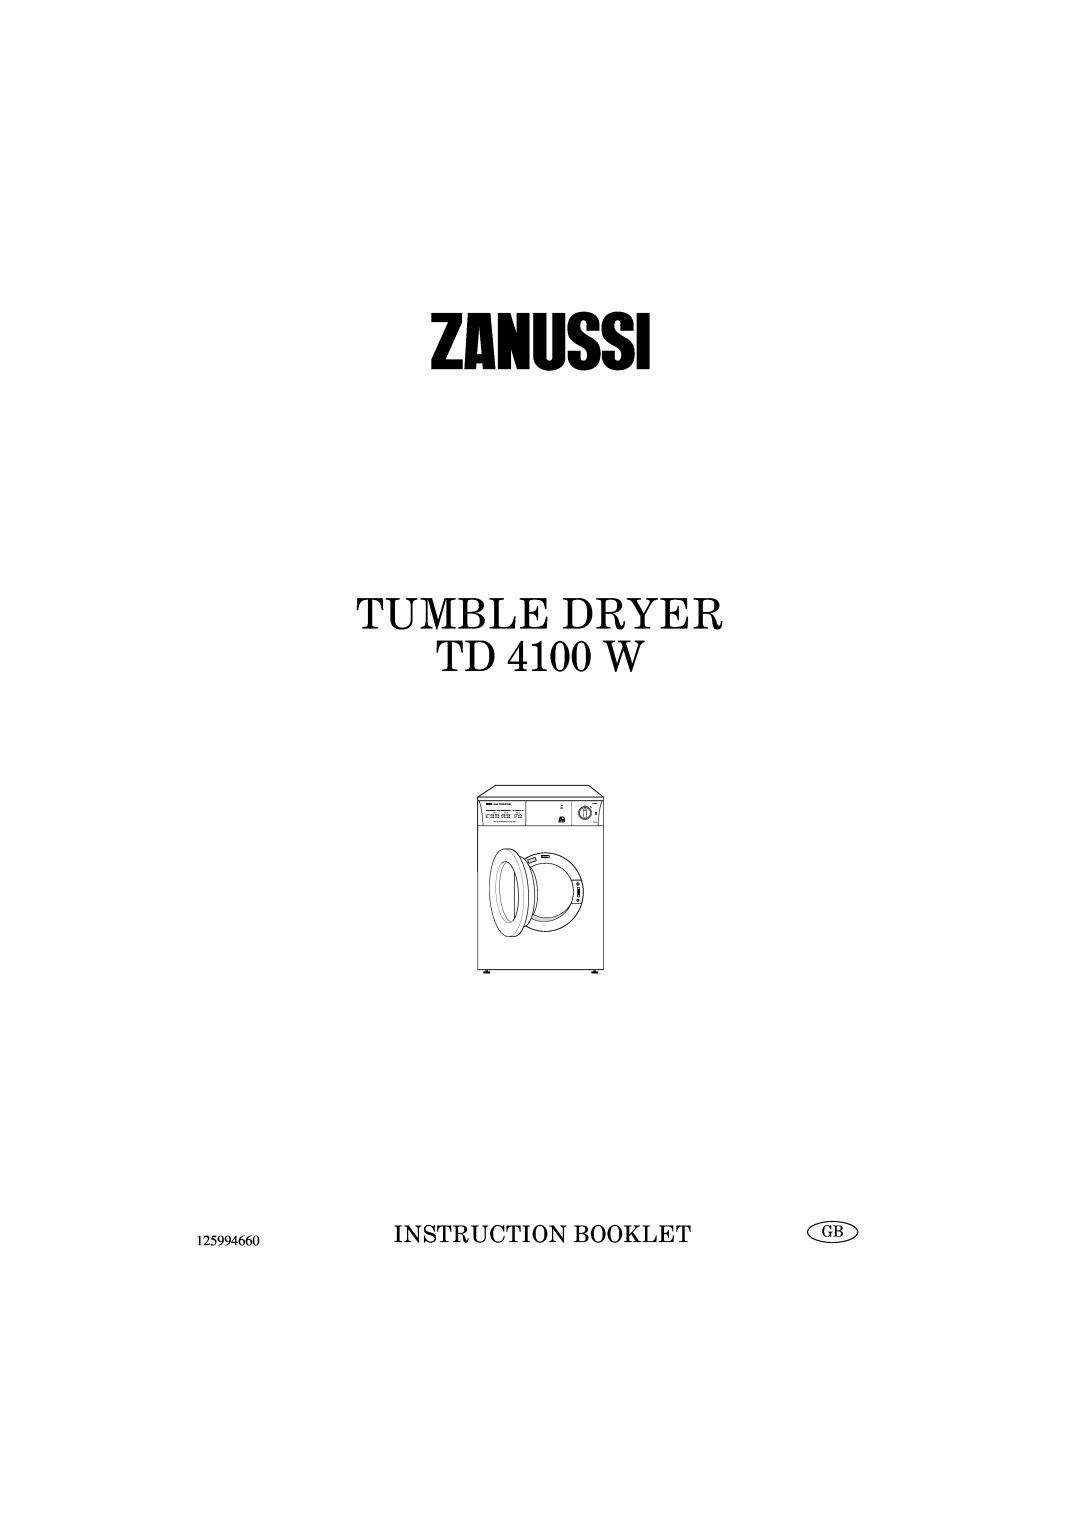 Zanussi manual TUMBLE DRYER TD 4100 W, Instruction Booklet, Dual Temperature 